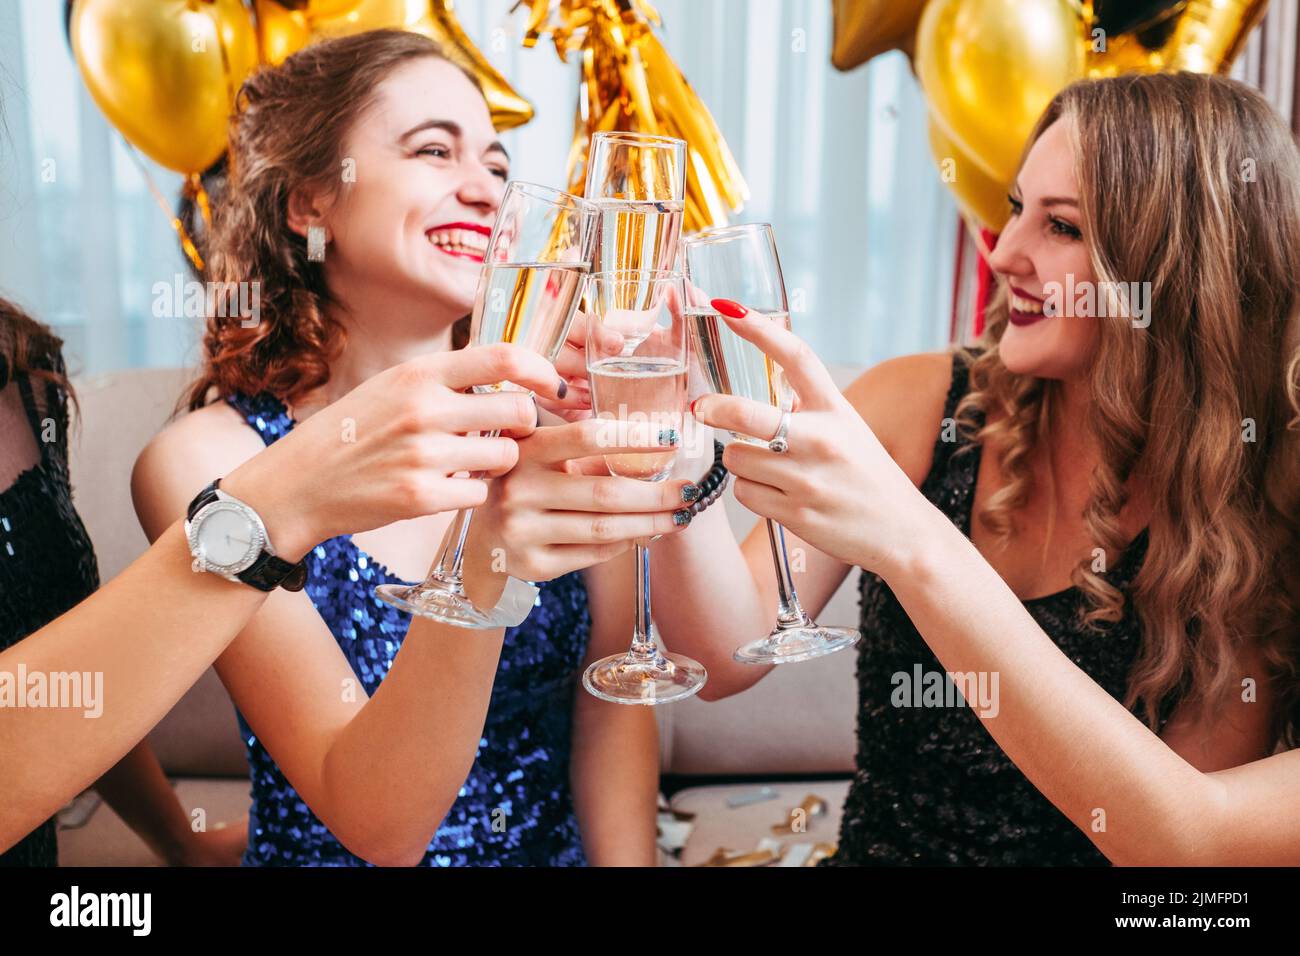 girls birthday party classy celebration champagne Stock Photo